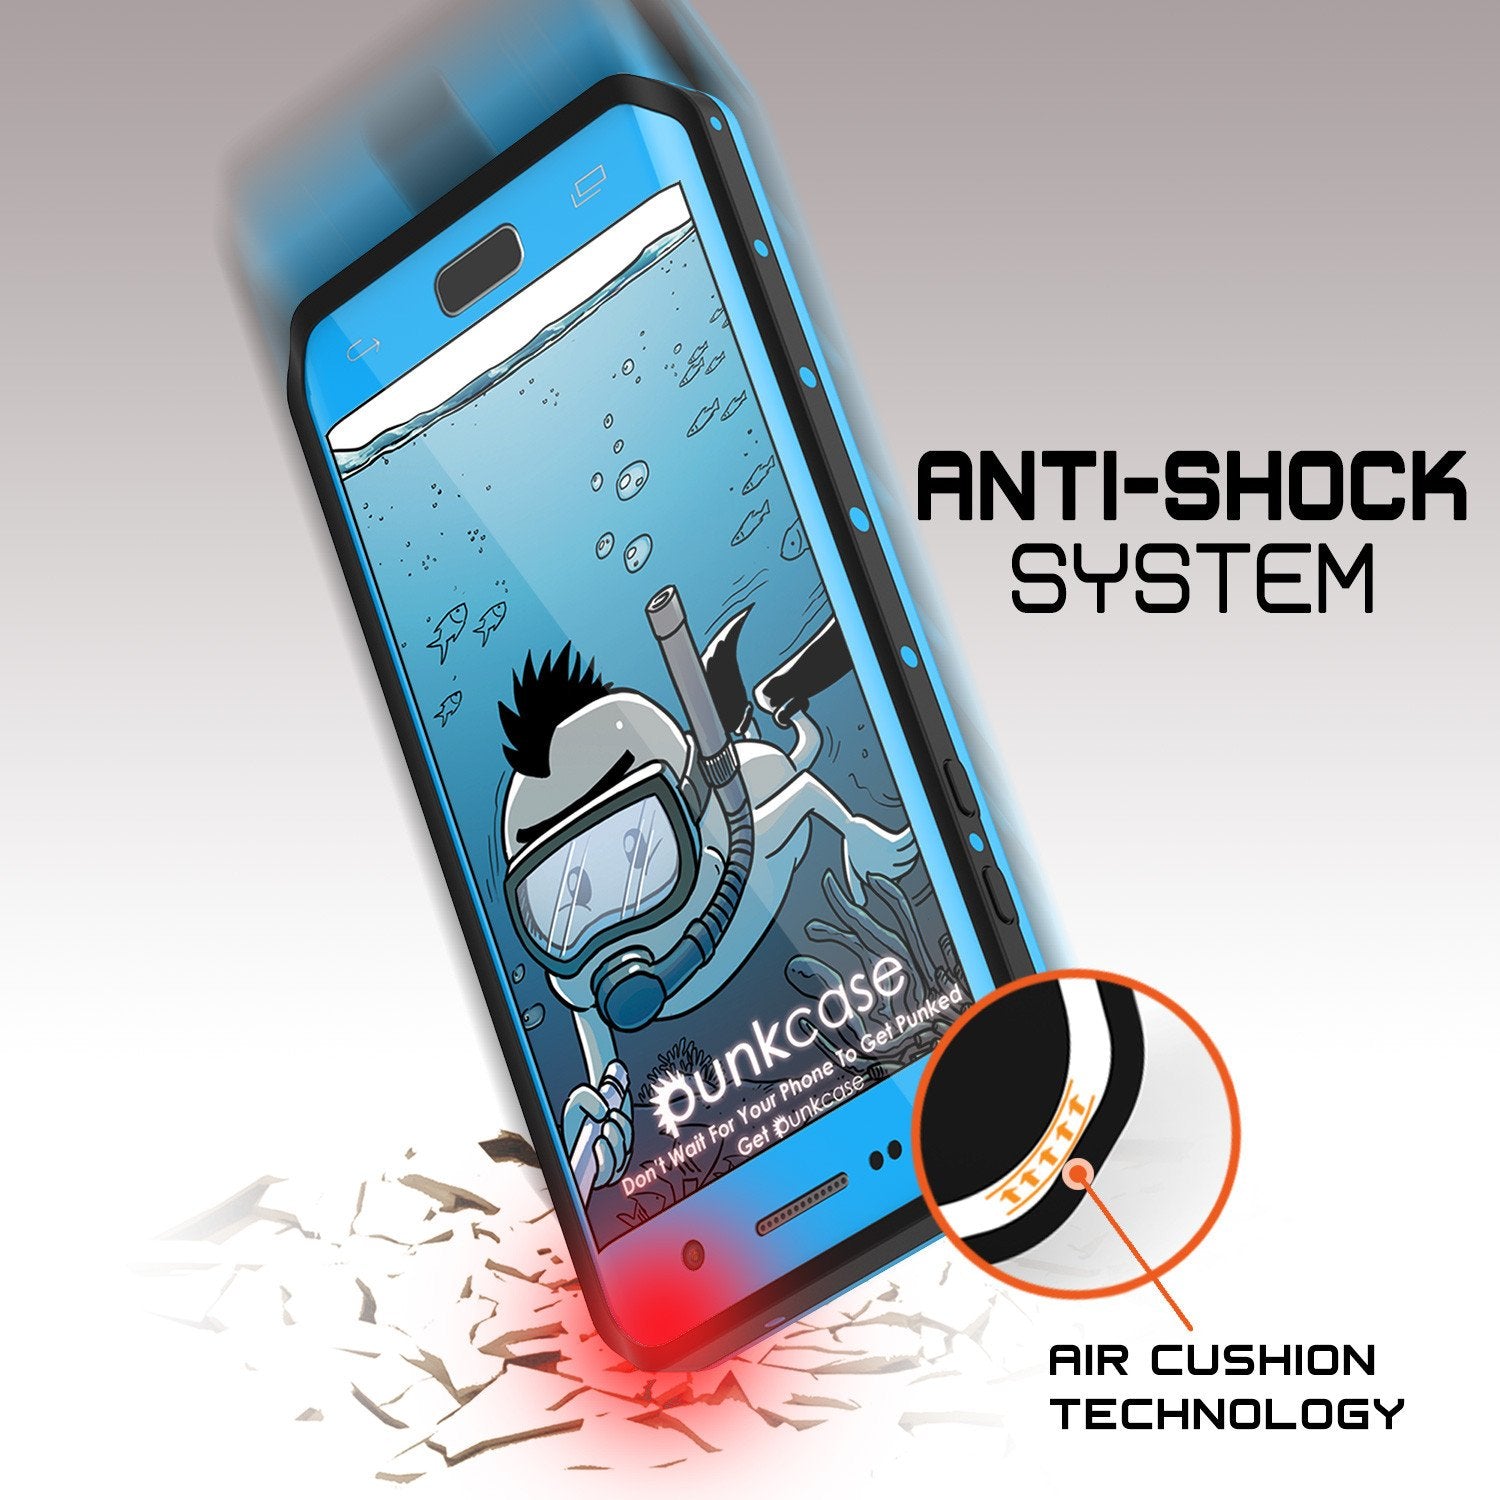 Galaxy S7 EDGE Waterproof Case PunkCase StudStar Light Blue Thin 6.6ft Underwater IP68 ShockProof